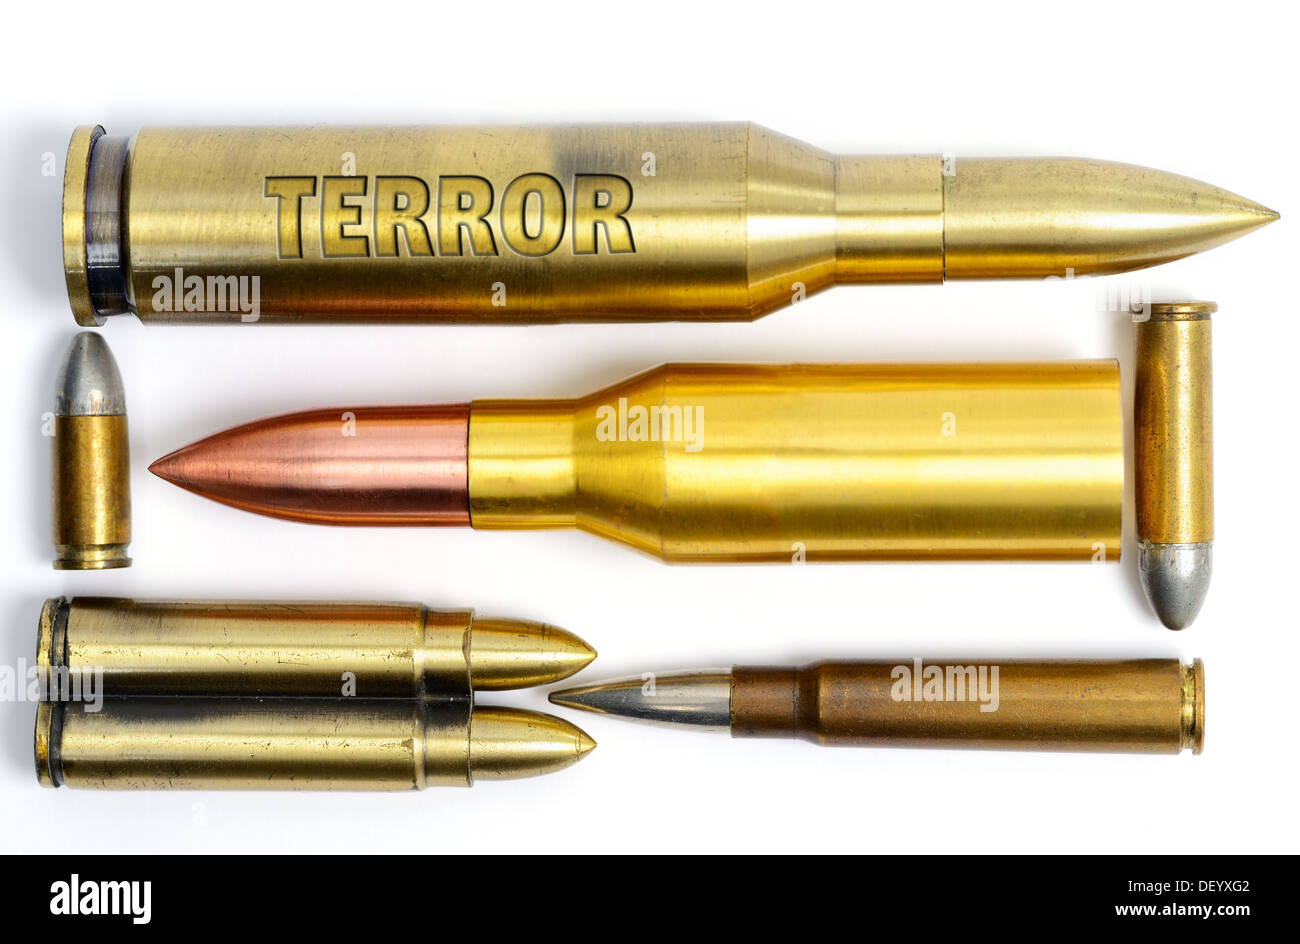 Ammunition with terror engraving, terror warning, Munition mit Terror-Gravur, Terrorwarnung Stock Photo